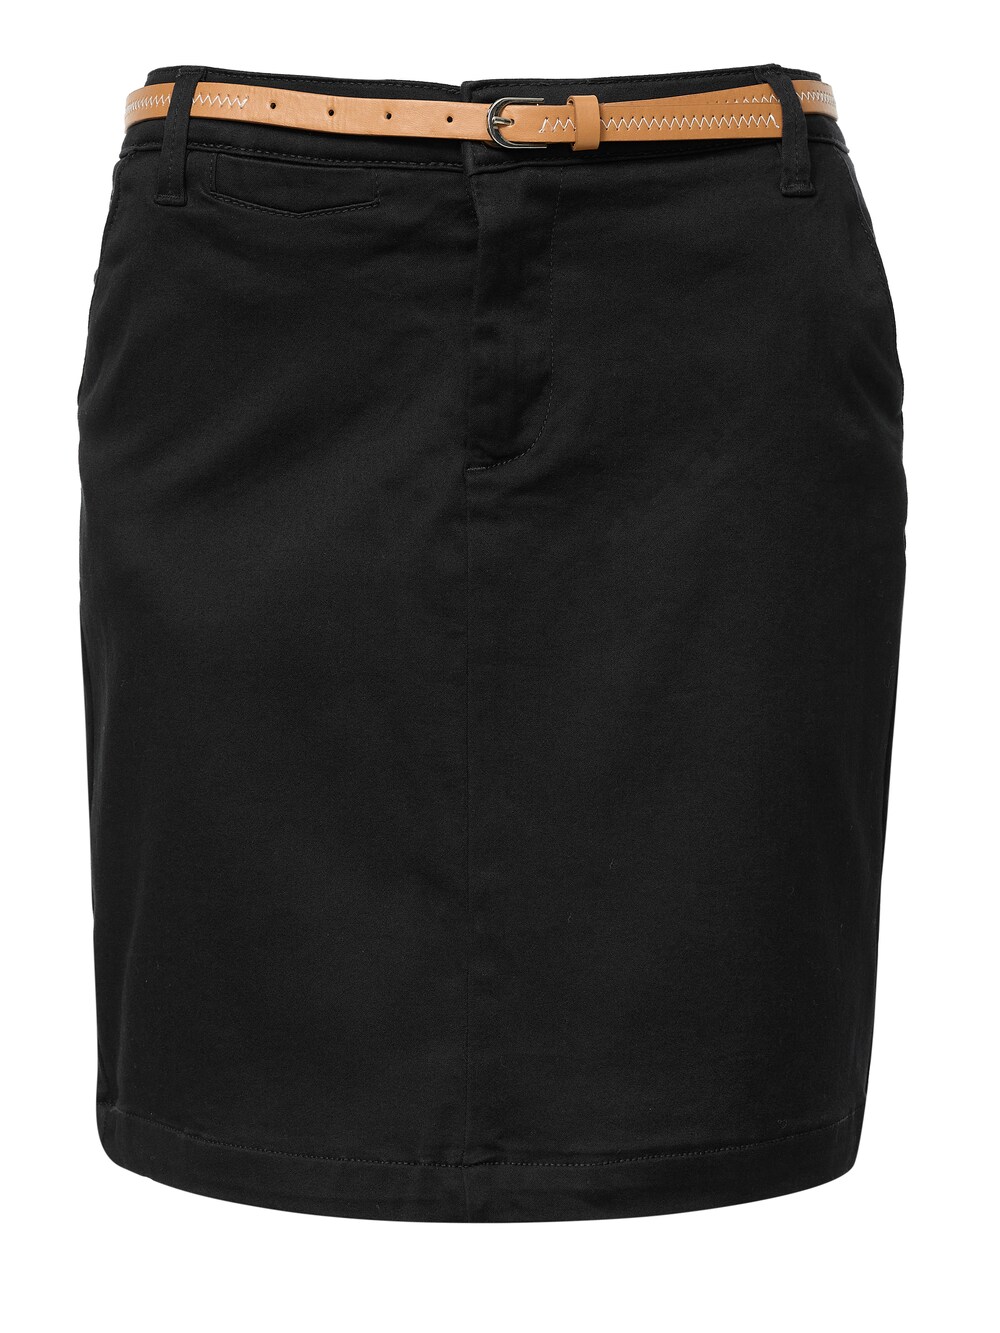 Юбка Orsay, черный юбка orsay светлая 44 размер